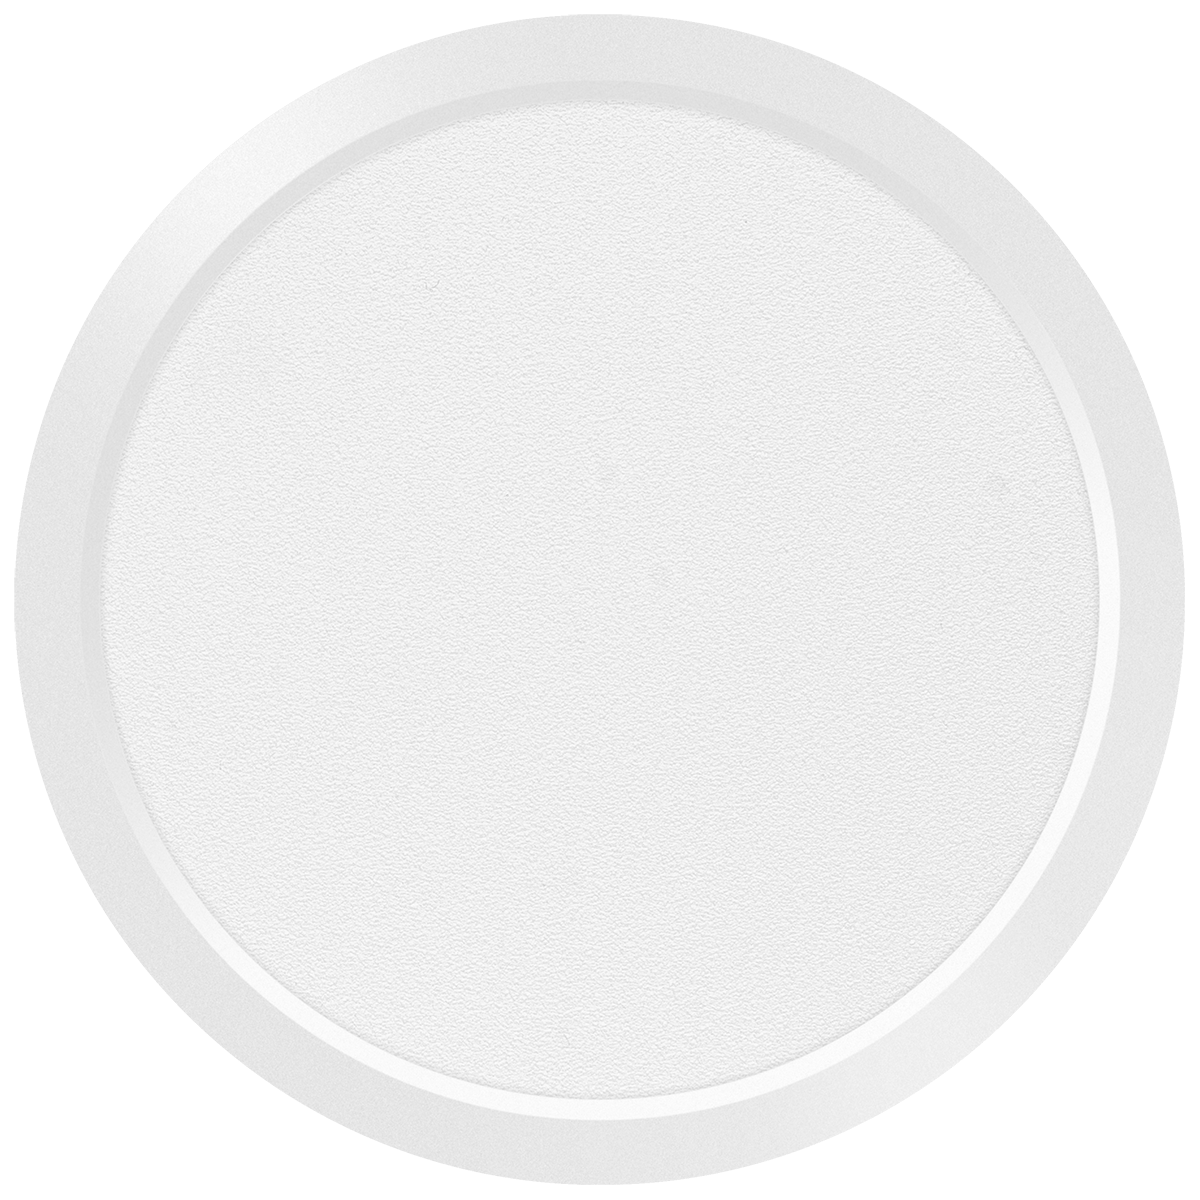 05-PL2364-31. Geavanceerde ronde plafonnier witte rand